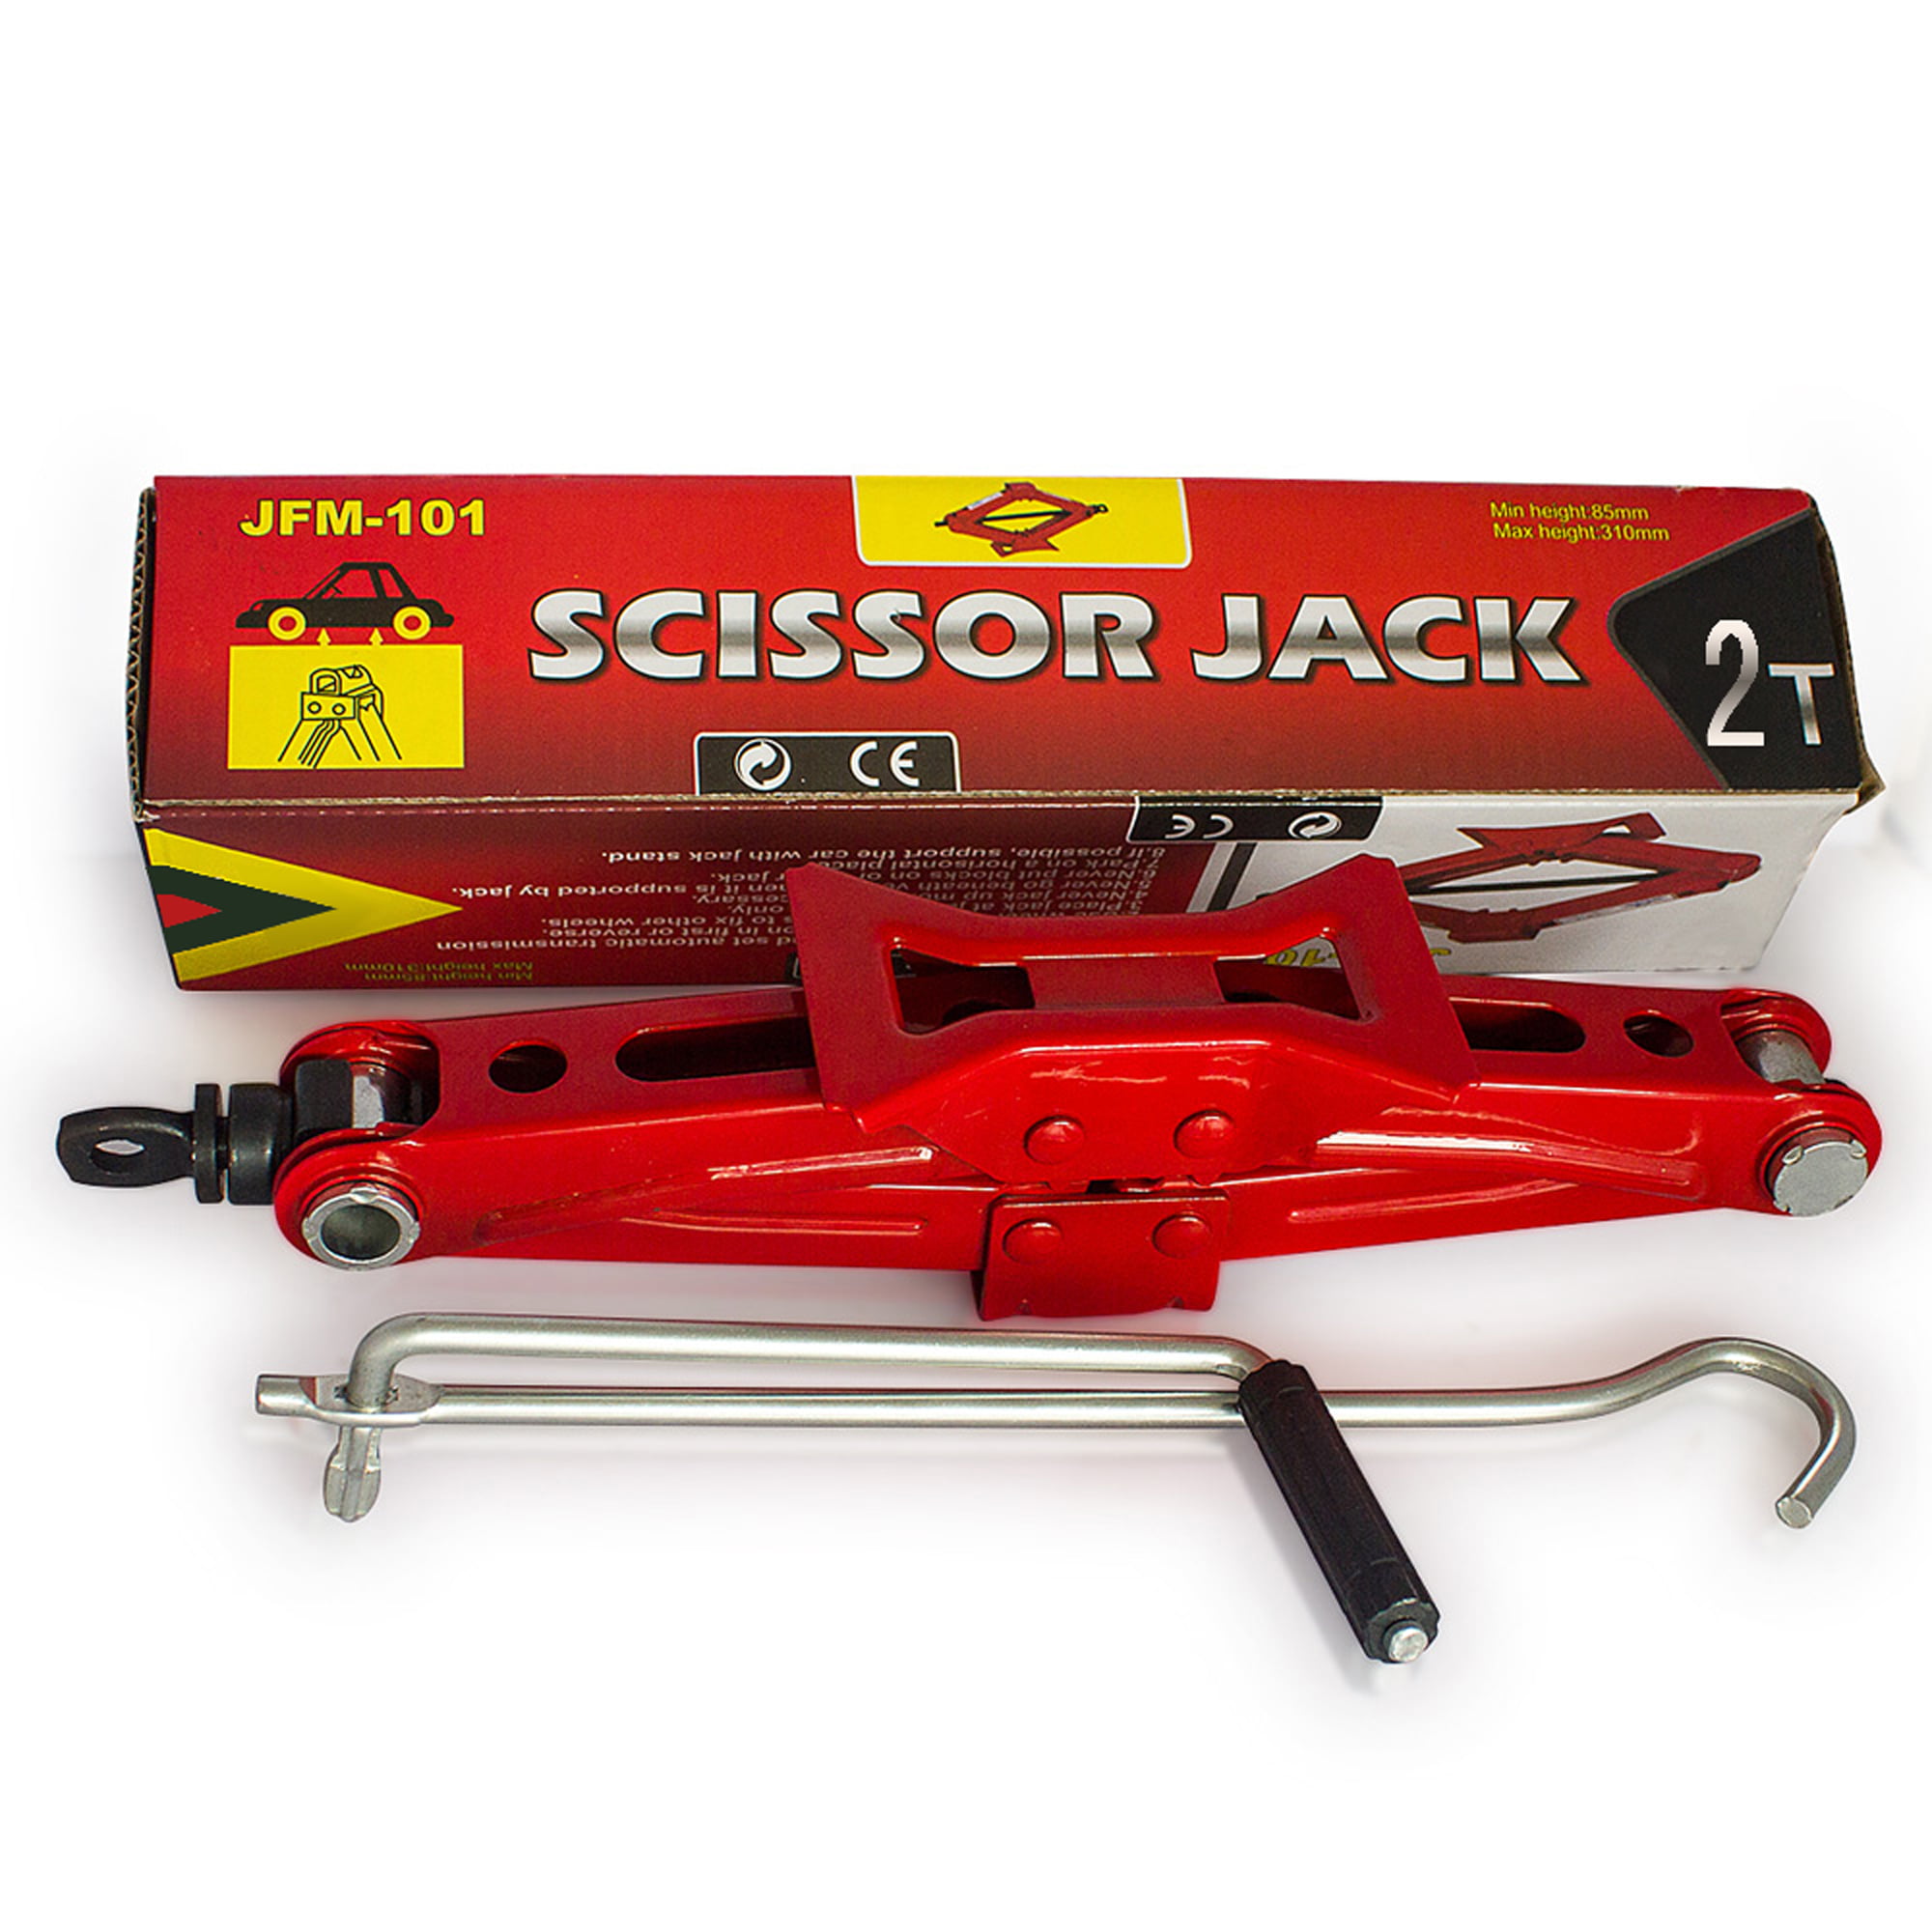 Pro Scissor Jack Emergency Wind Up Lift for Car Van Garage W/ Speed Handle 2 Ton 